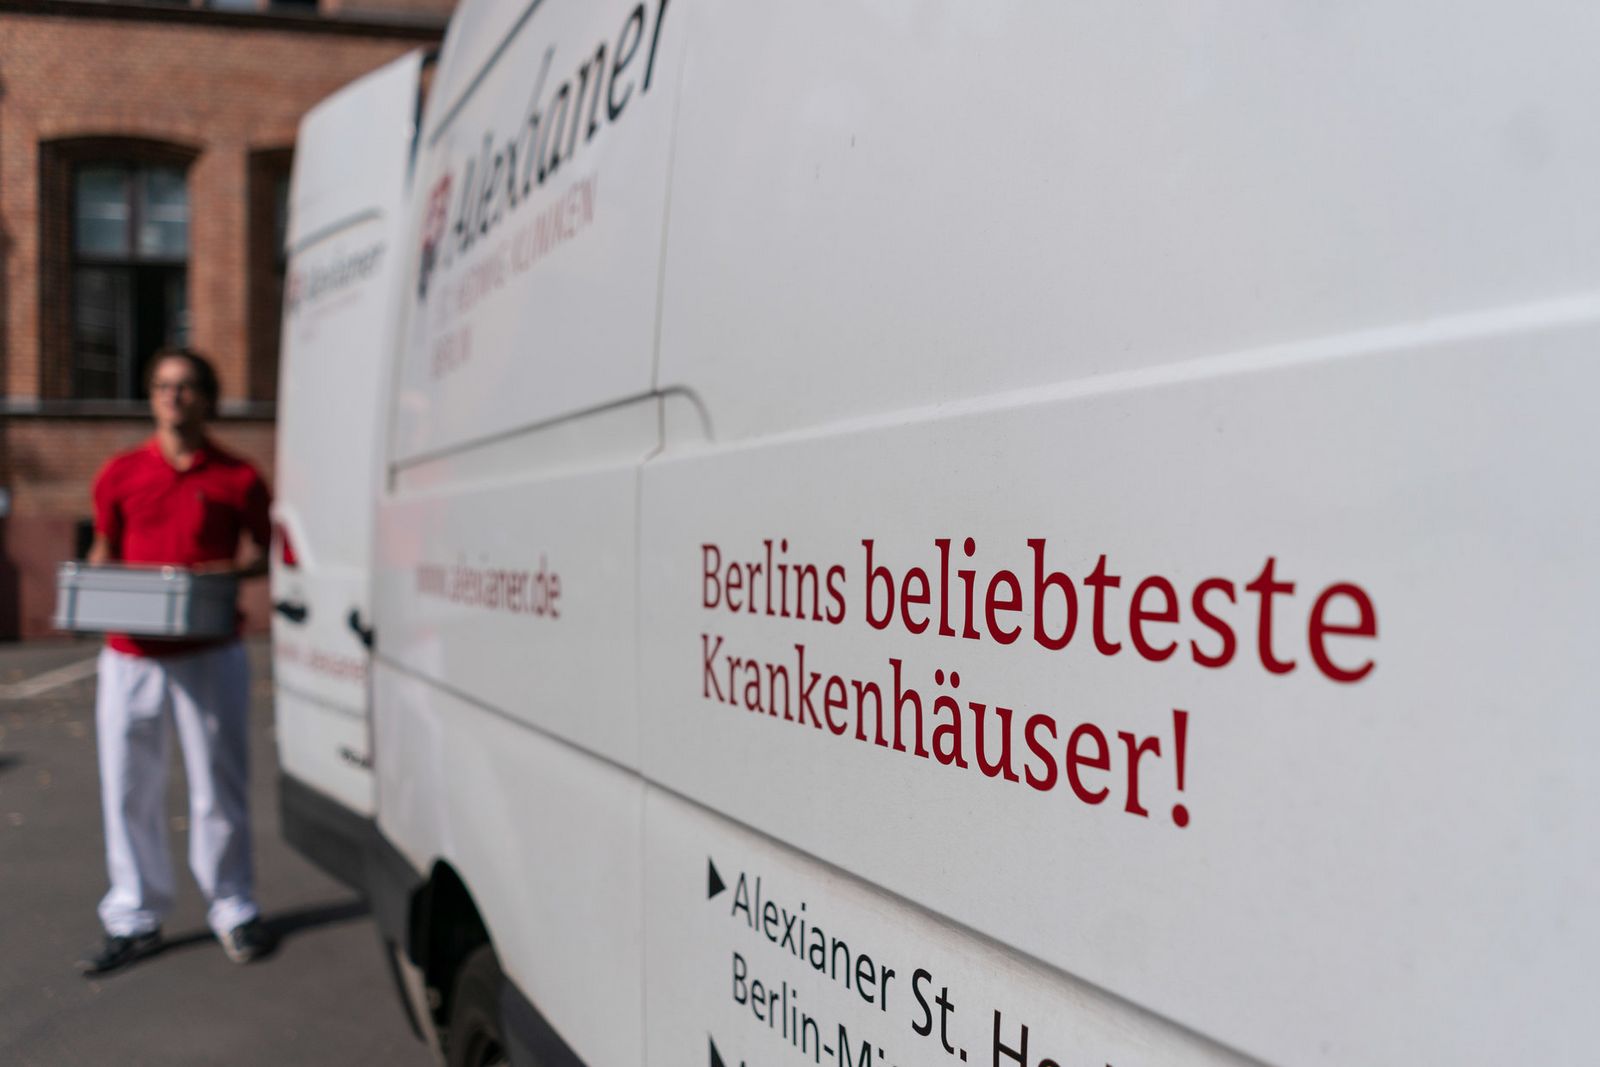 St. Hedwig-Krankenhaus: Transporter mit Schriftzug "Berlins beliebteste Krankenhäuser"